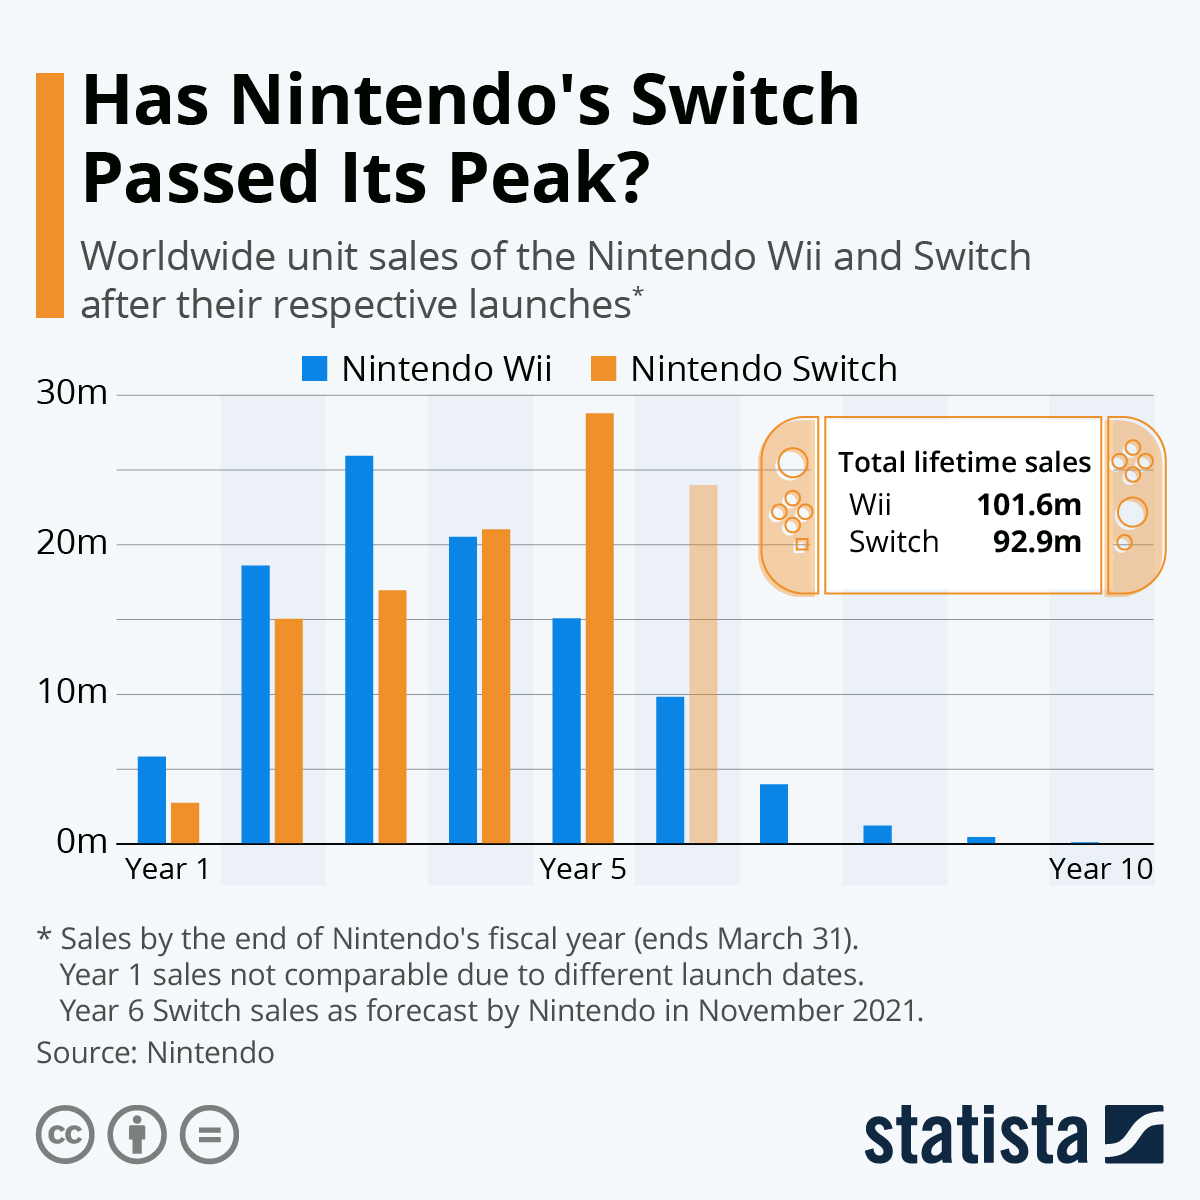 Has Nintendo's Switch Passed Its Peak?